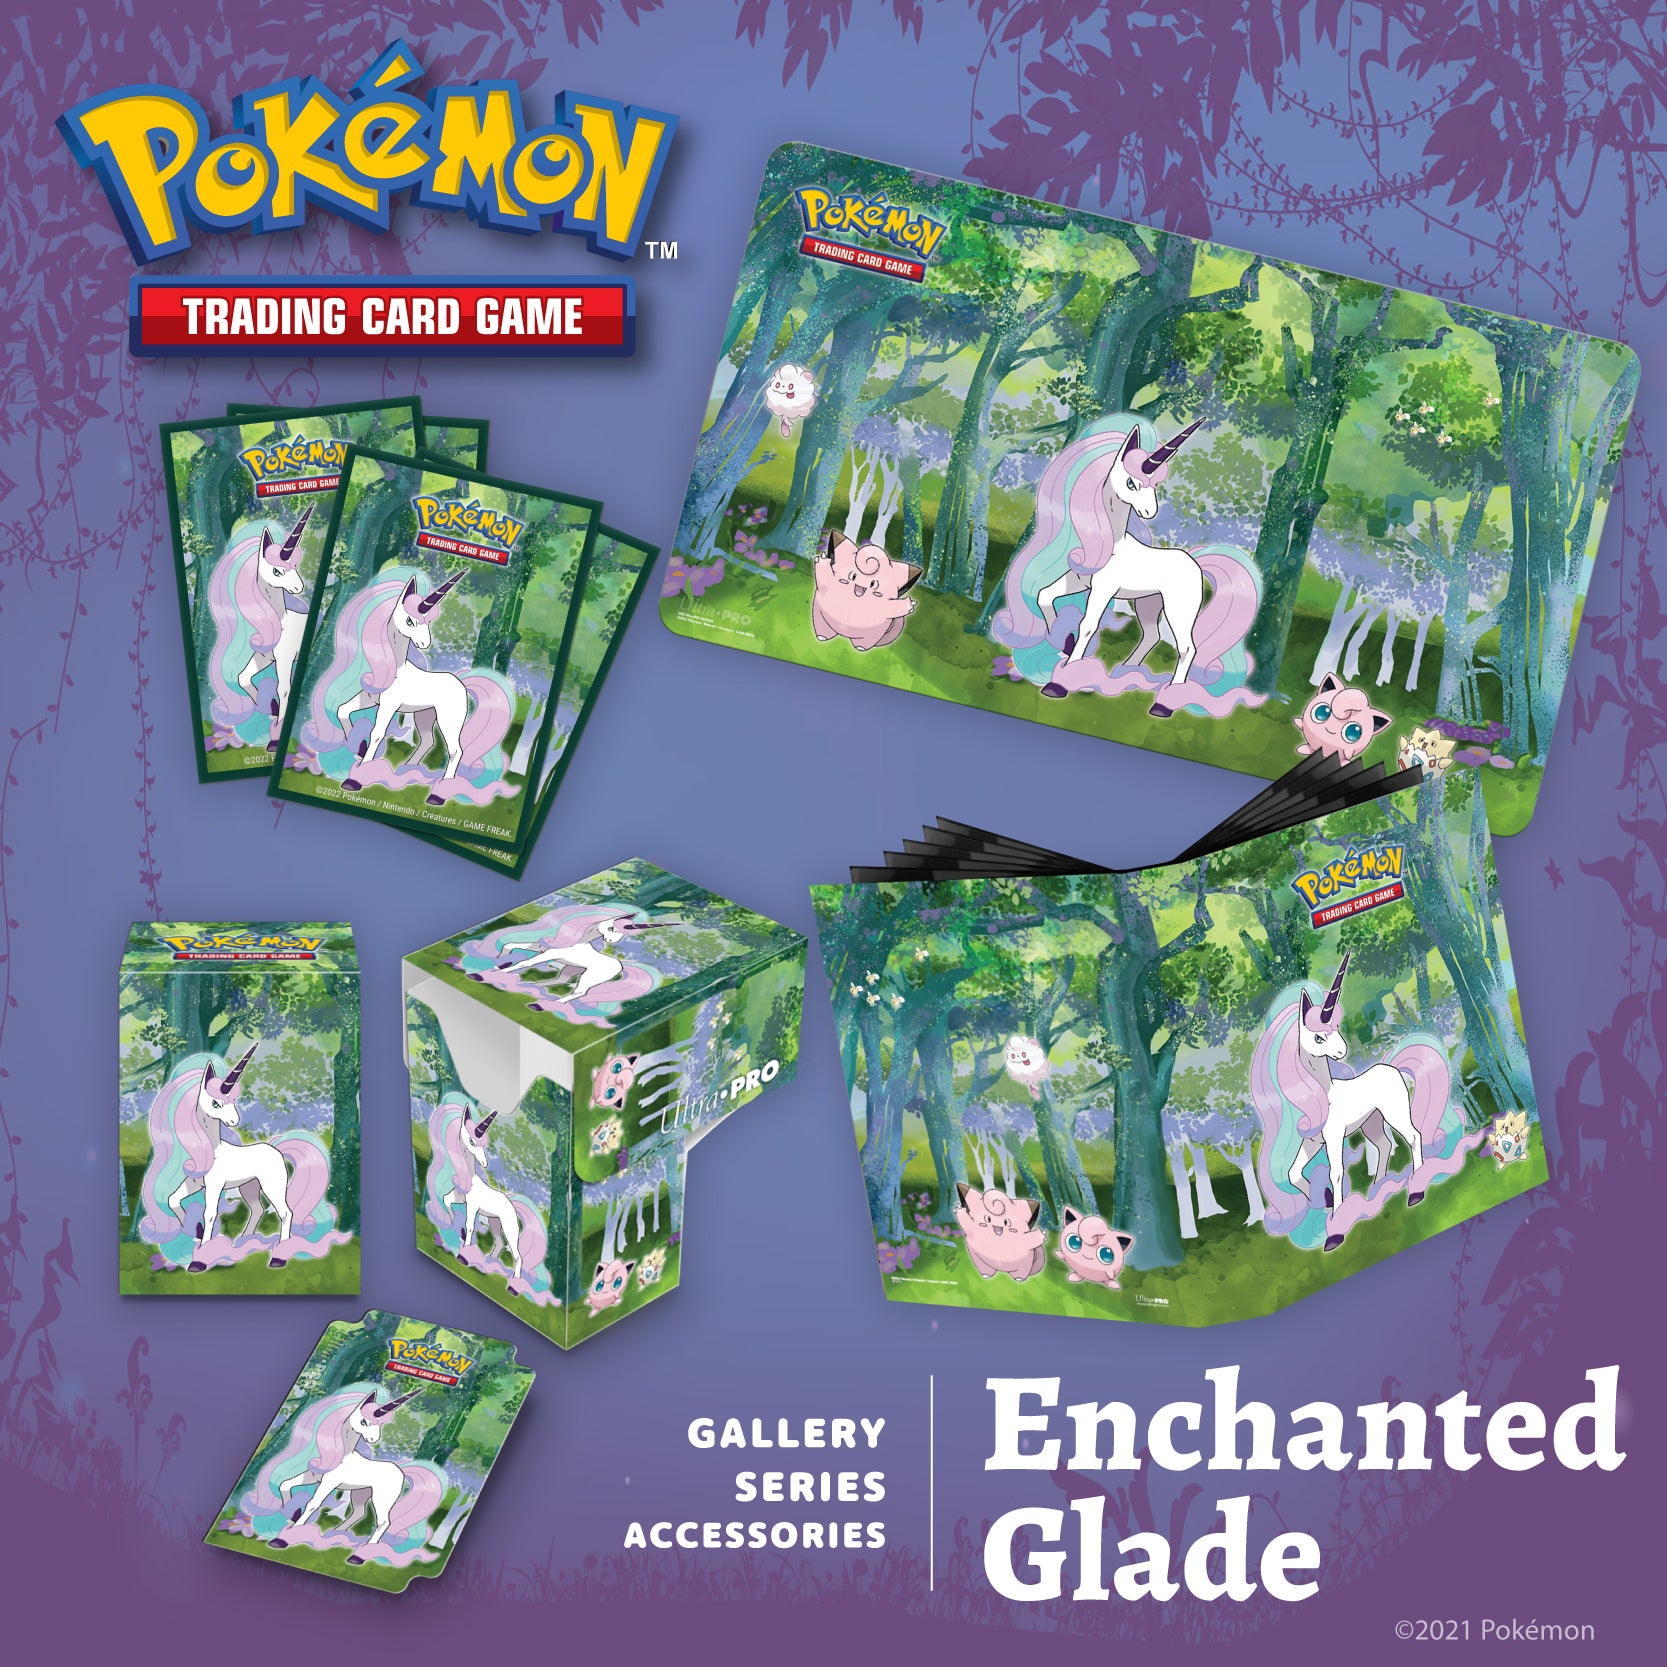 Gallery Series Enchanted Glade 4-Pocket Portfolio for Pokémon